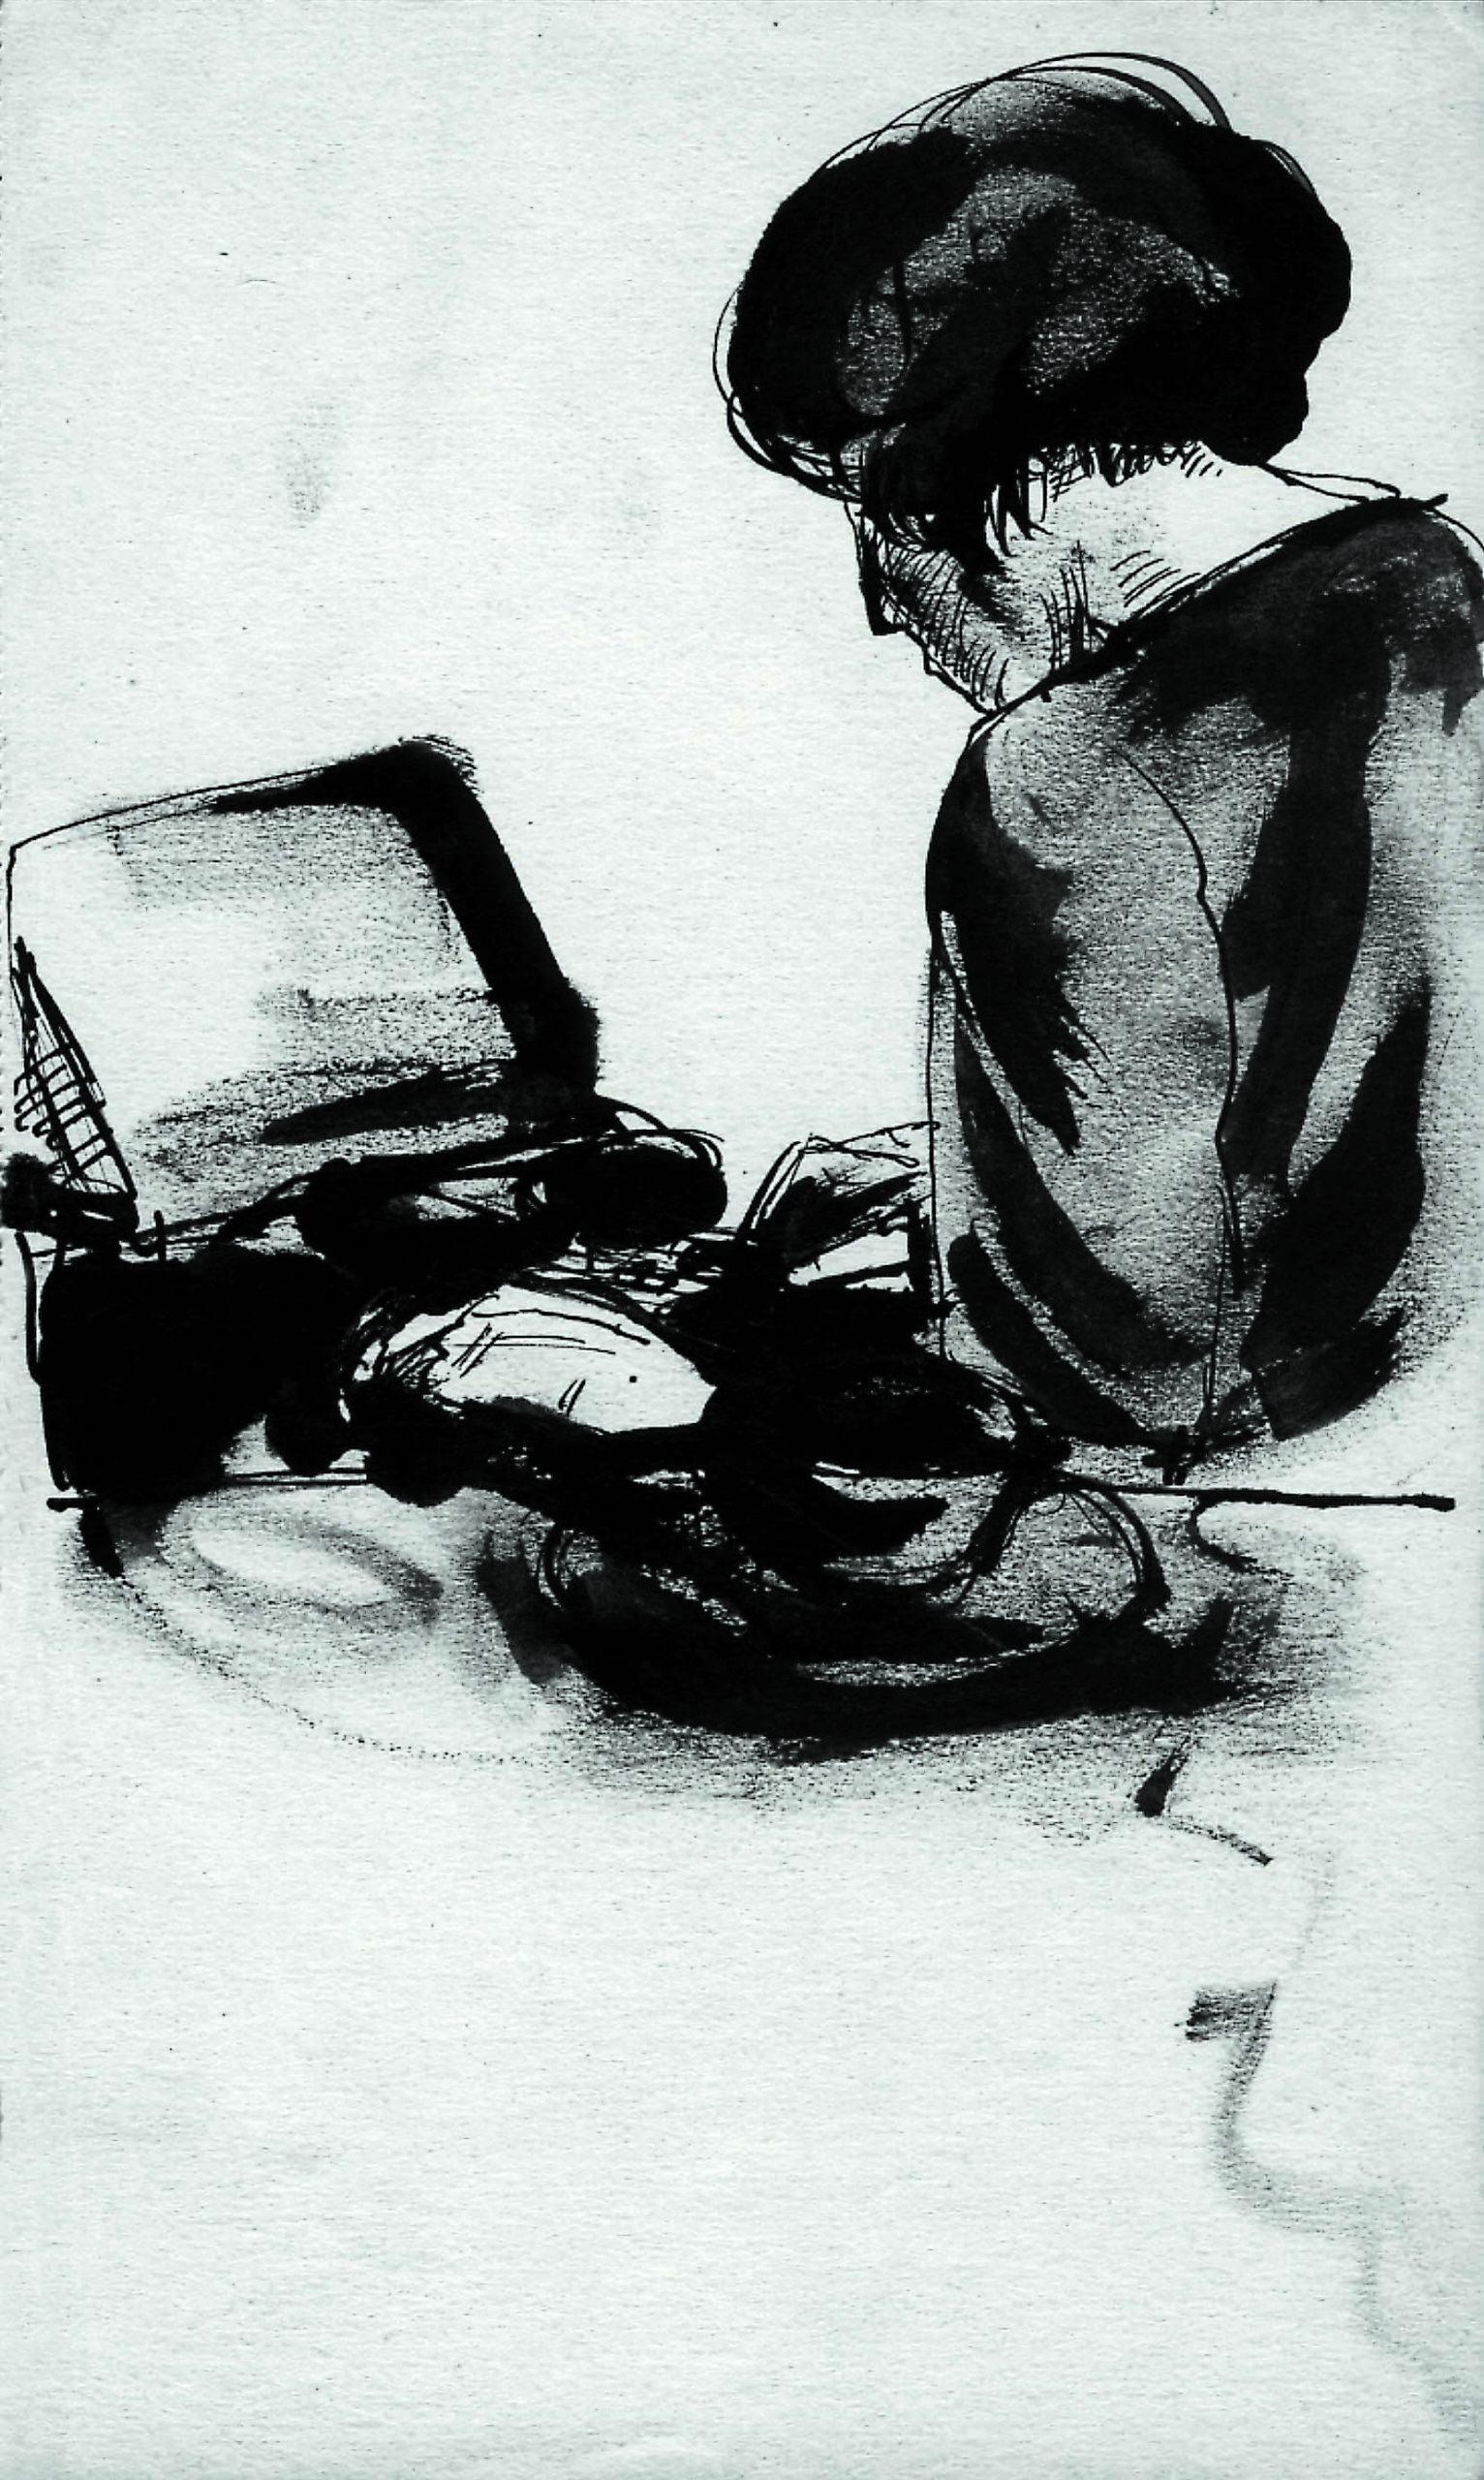 Dibujo de José Manaut titulado Lucrecia de Luna con máquina de escribir, París, 1925. Carboncillo sobre papel.